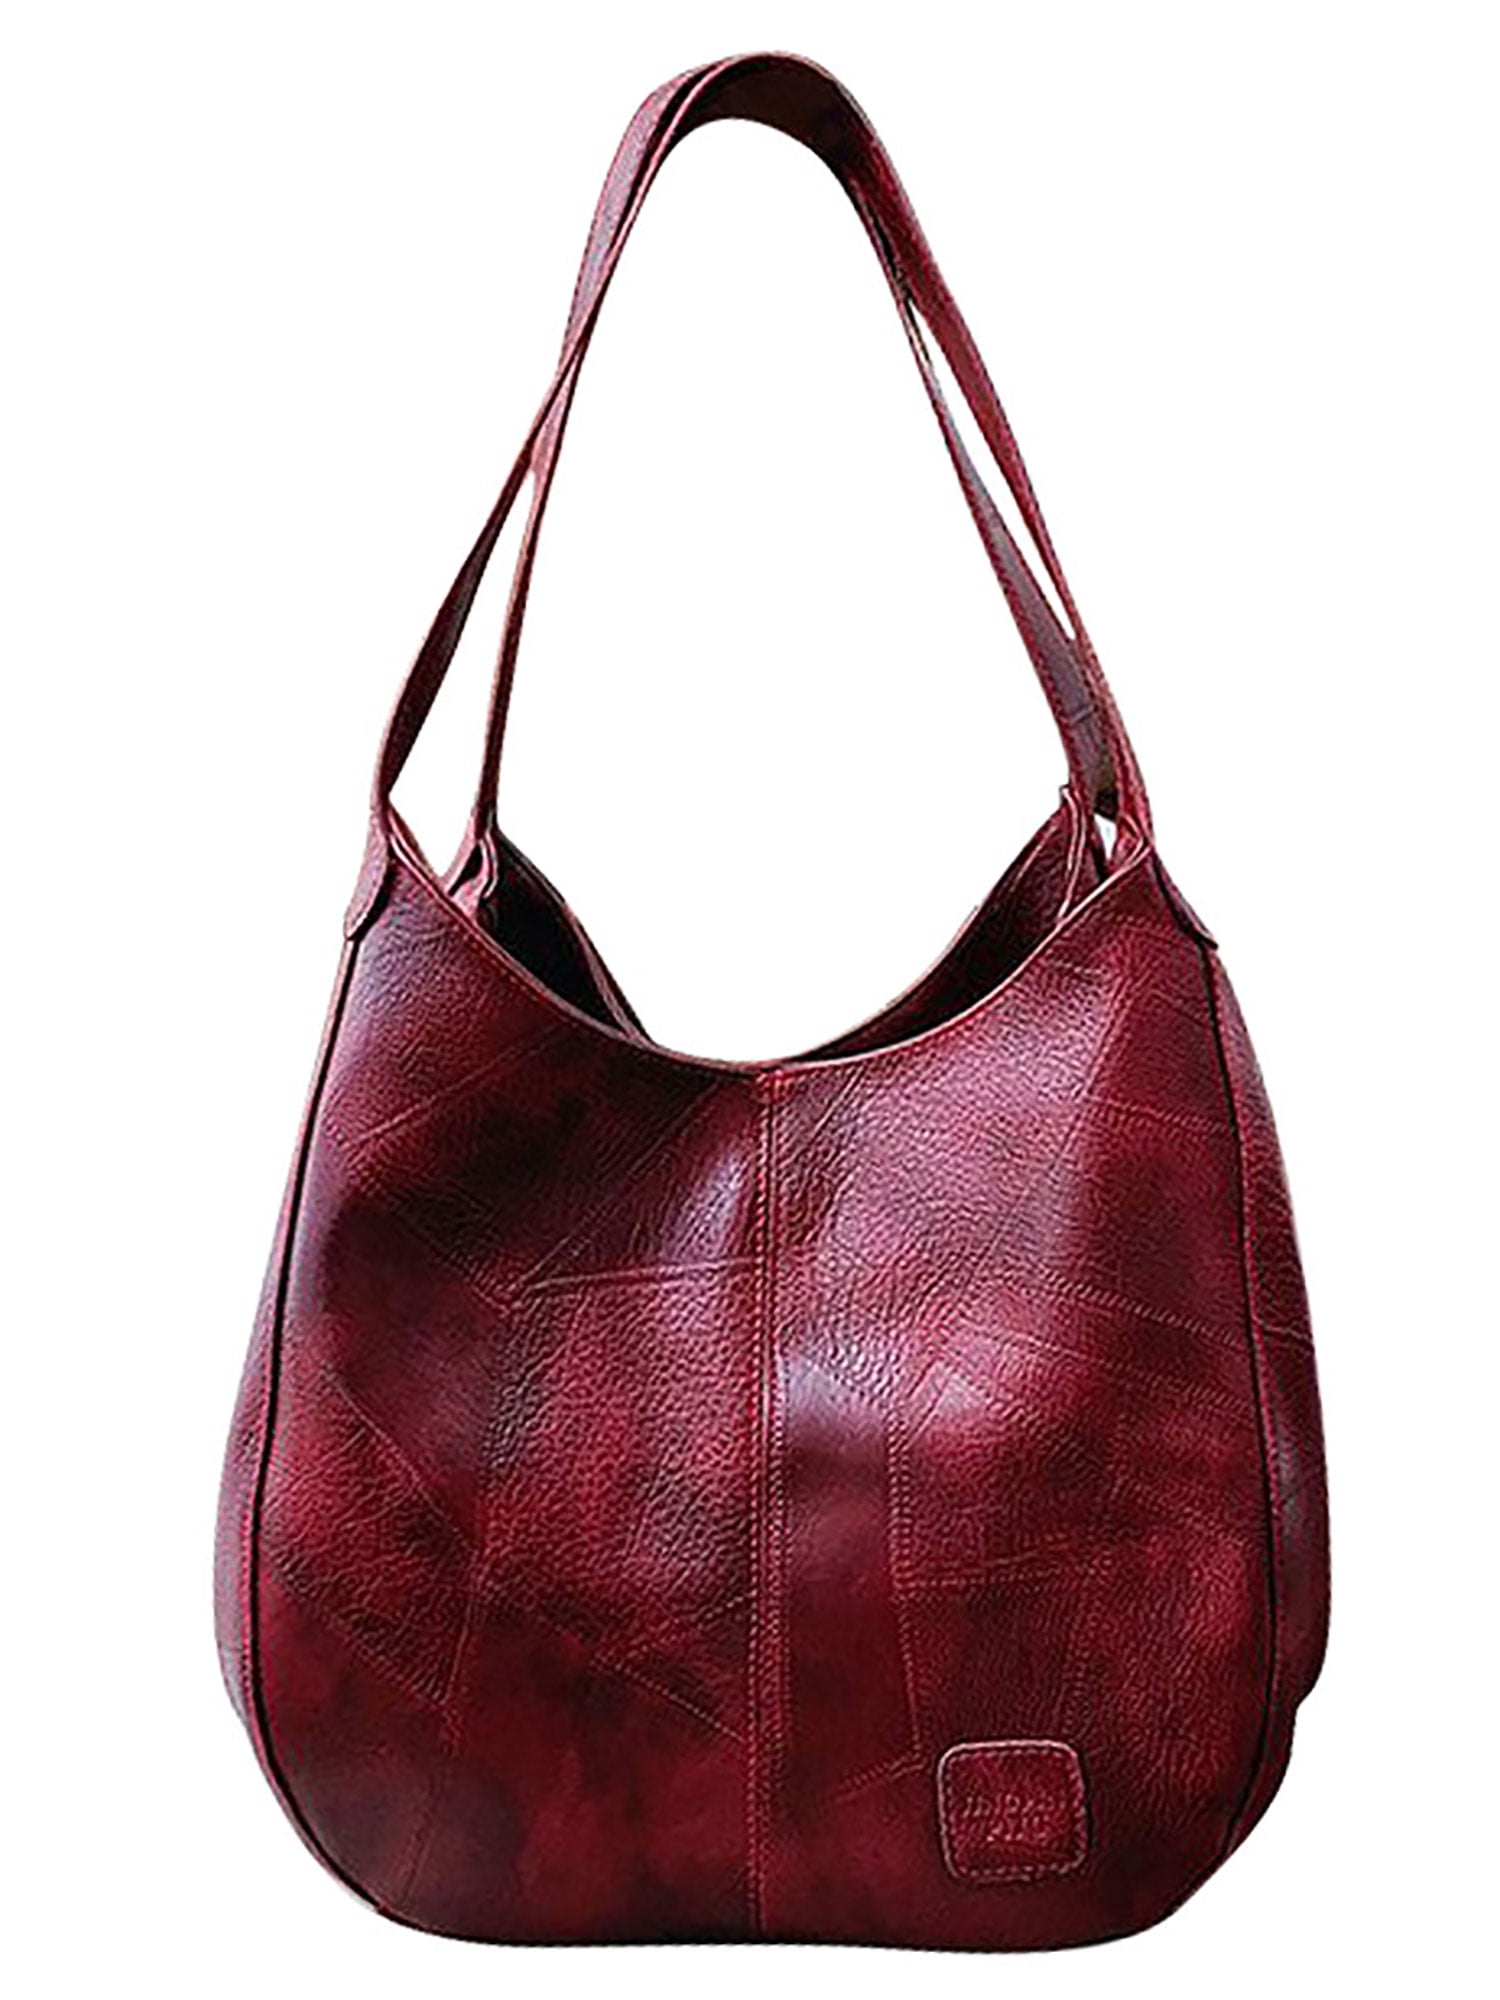 Medium Red Leather Hobo Bag - Slouchy Shoulder Purse | Laroll Bags